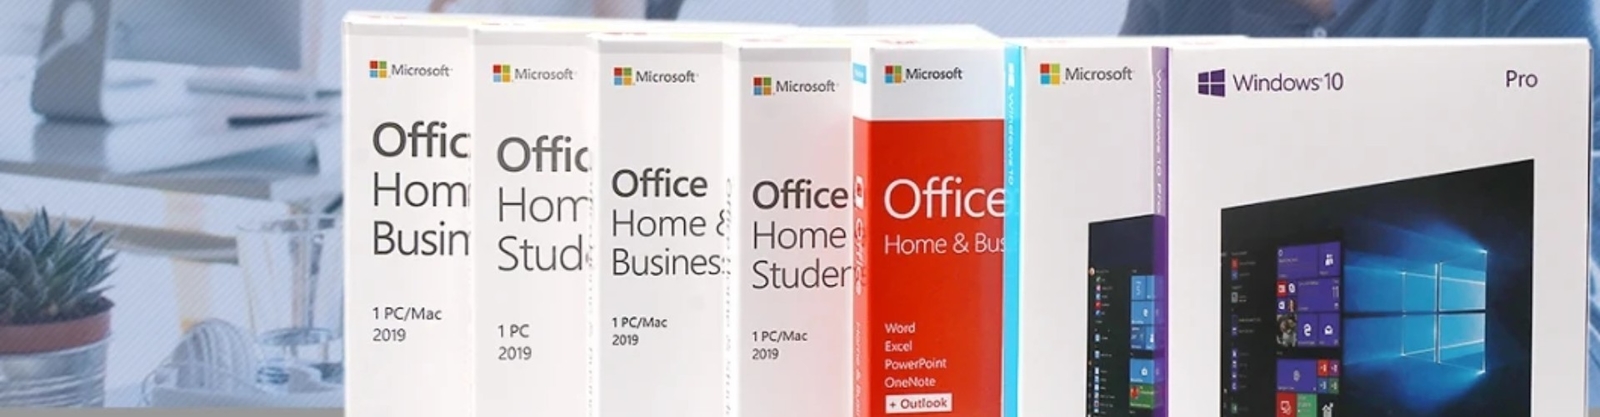 Microsoft Windows 10 직업적인 소매 상자